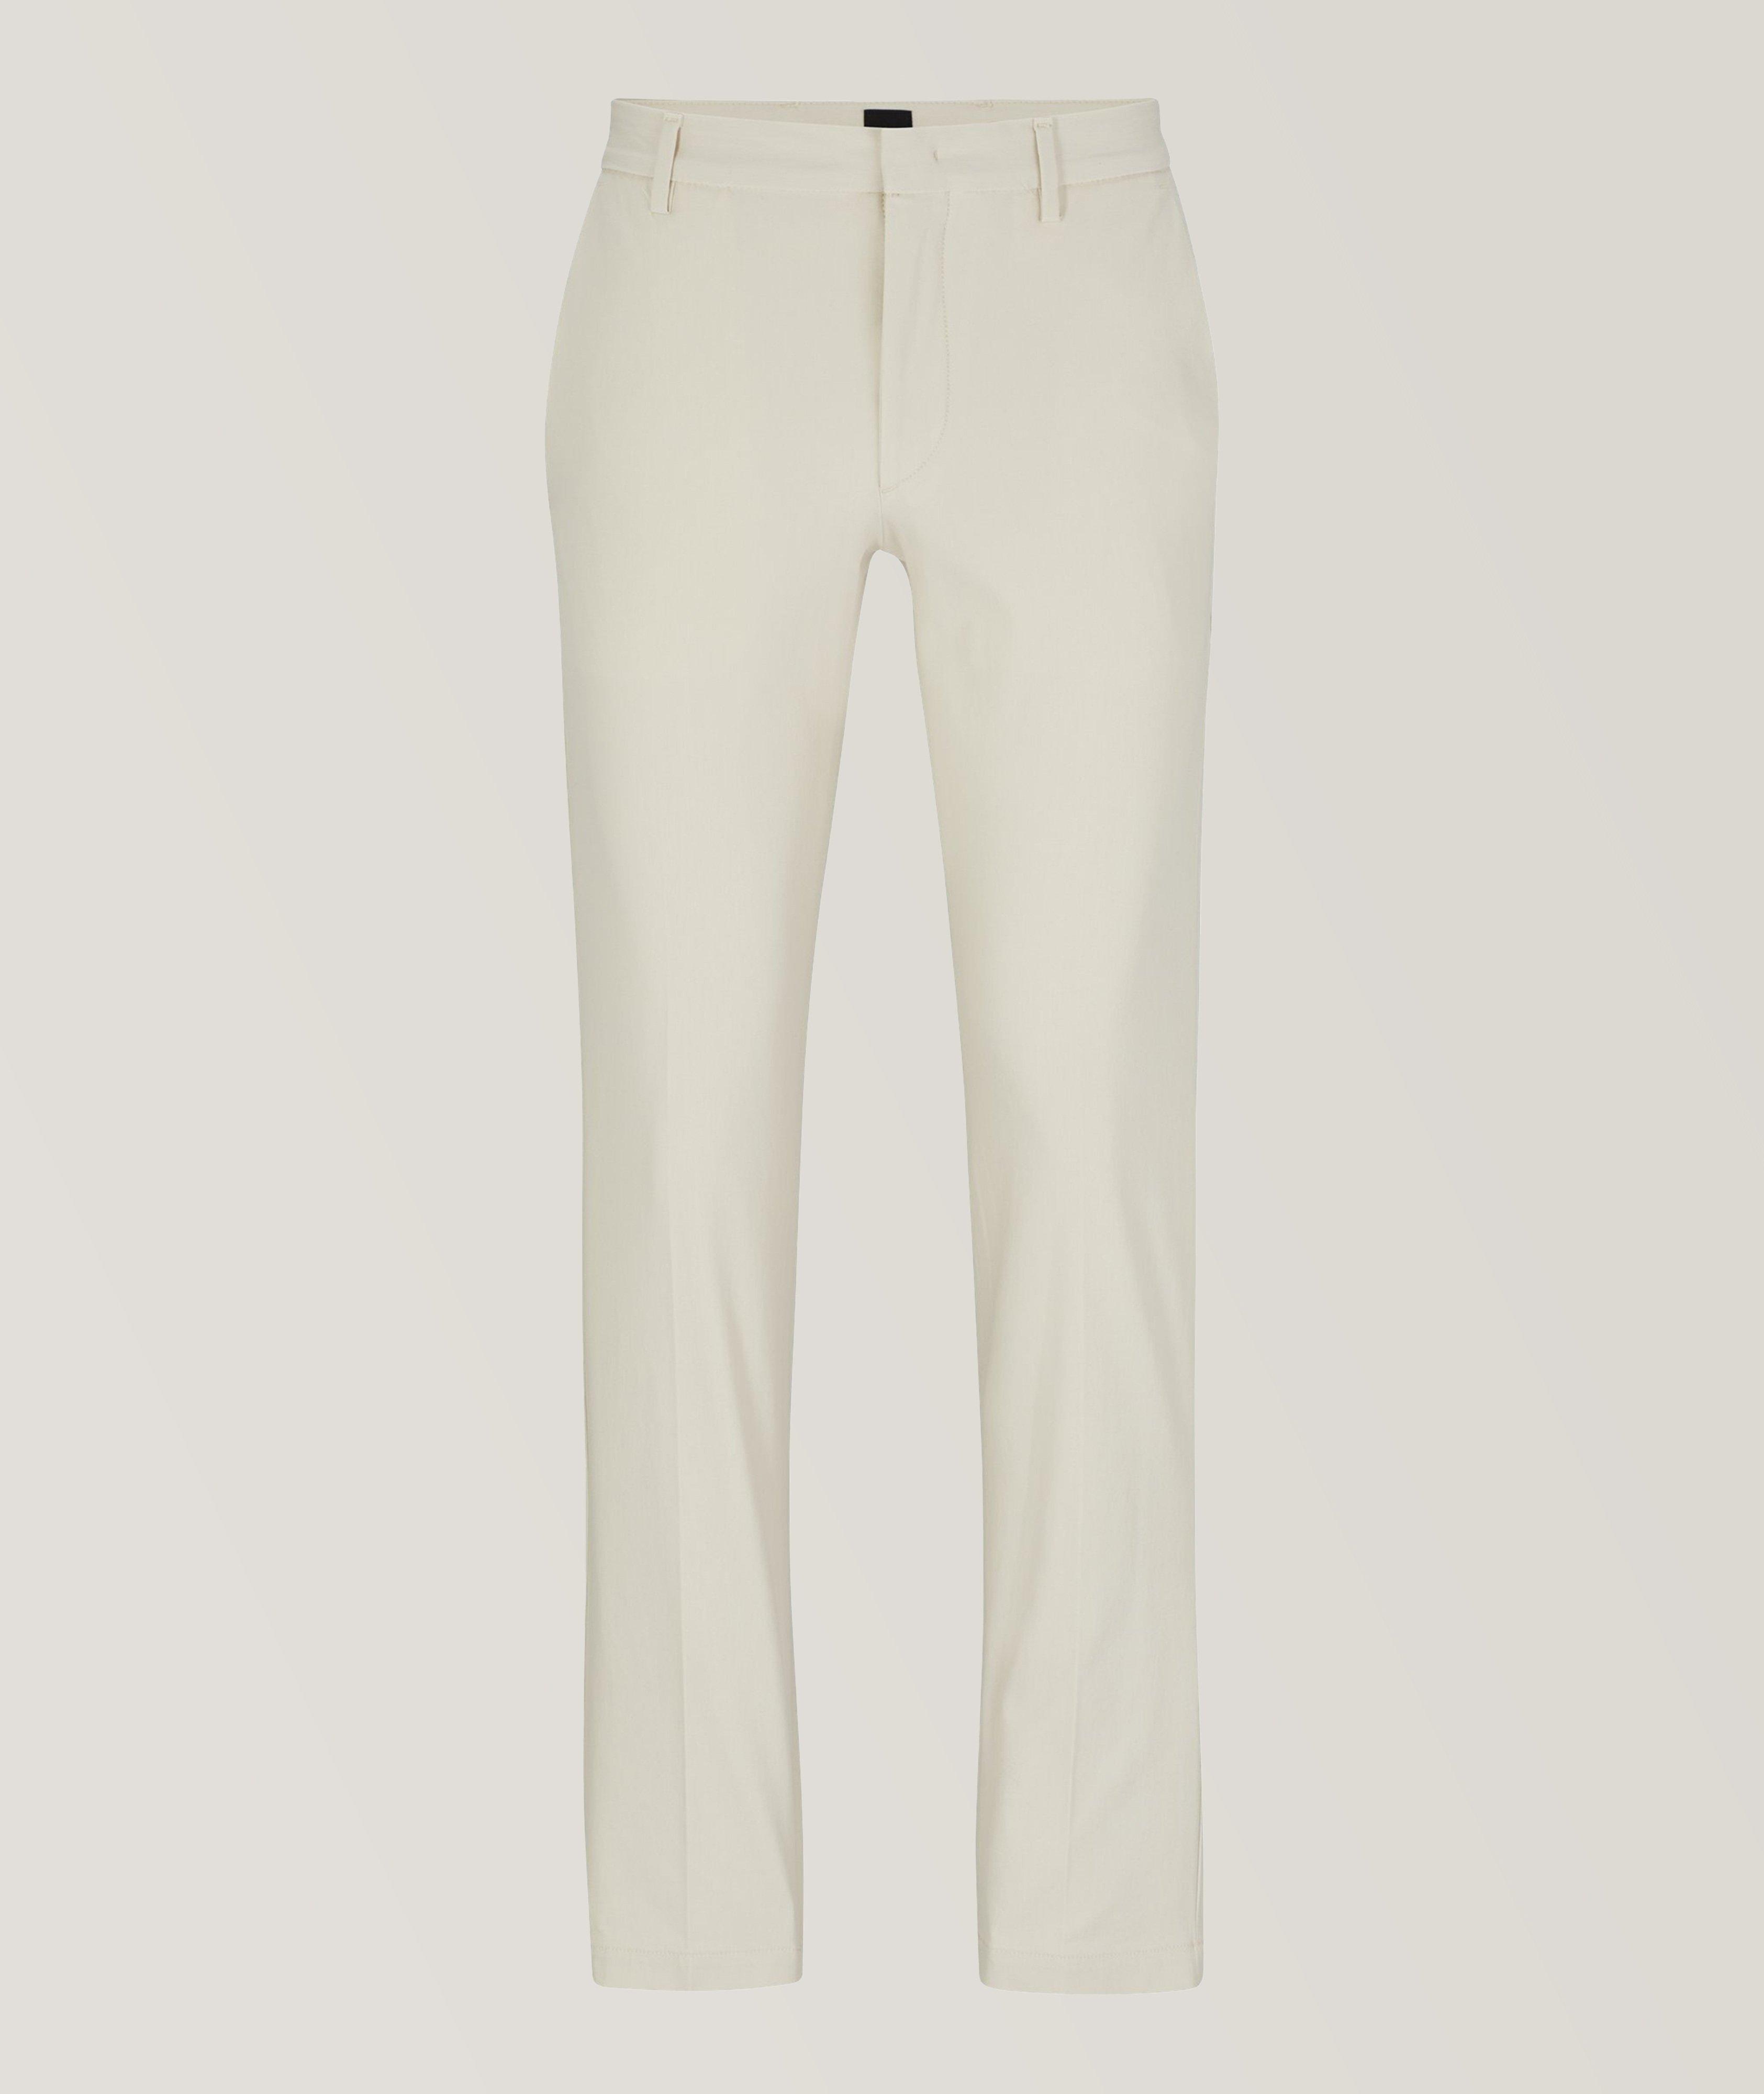 Slim-Fit Cotton Blend Trousers image 0